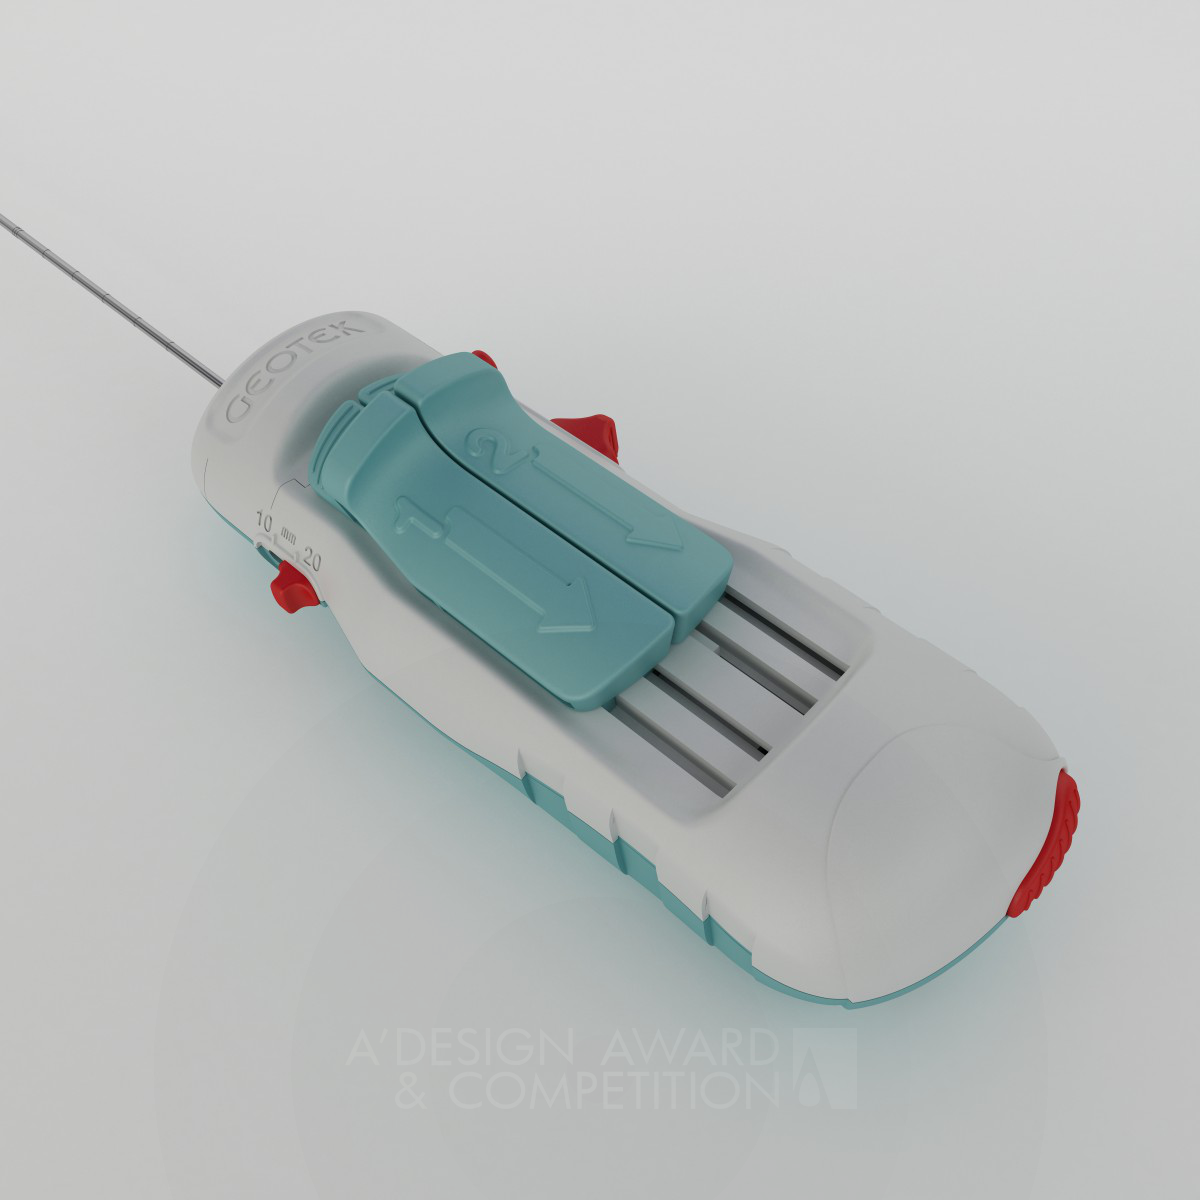 Biyopsi Biopsy Device by Hakan Gürsu Bronze Medical Devices and Medical Equipment Design Award Winner 2012 